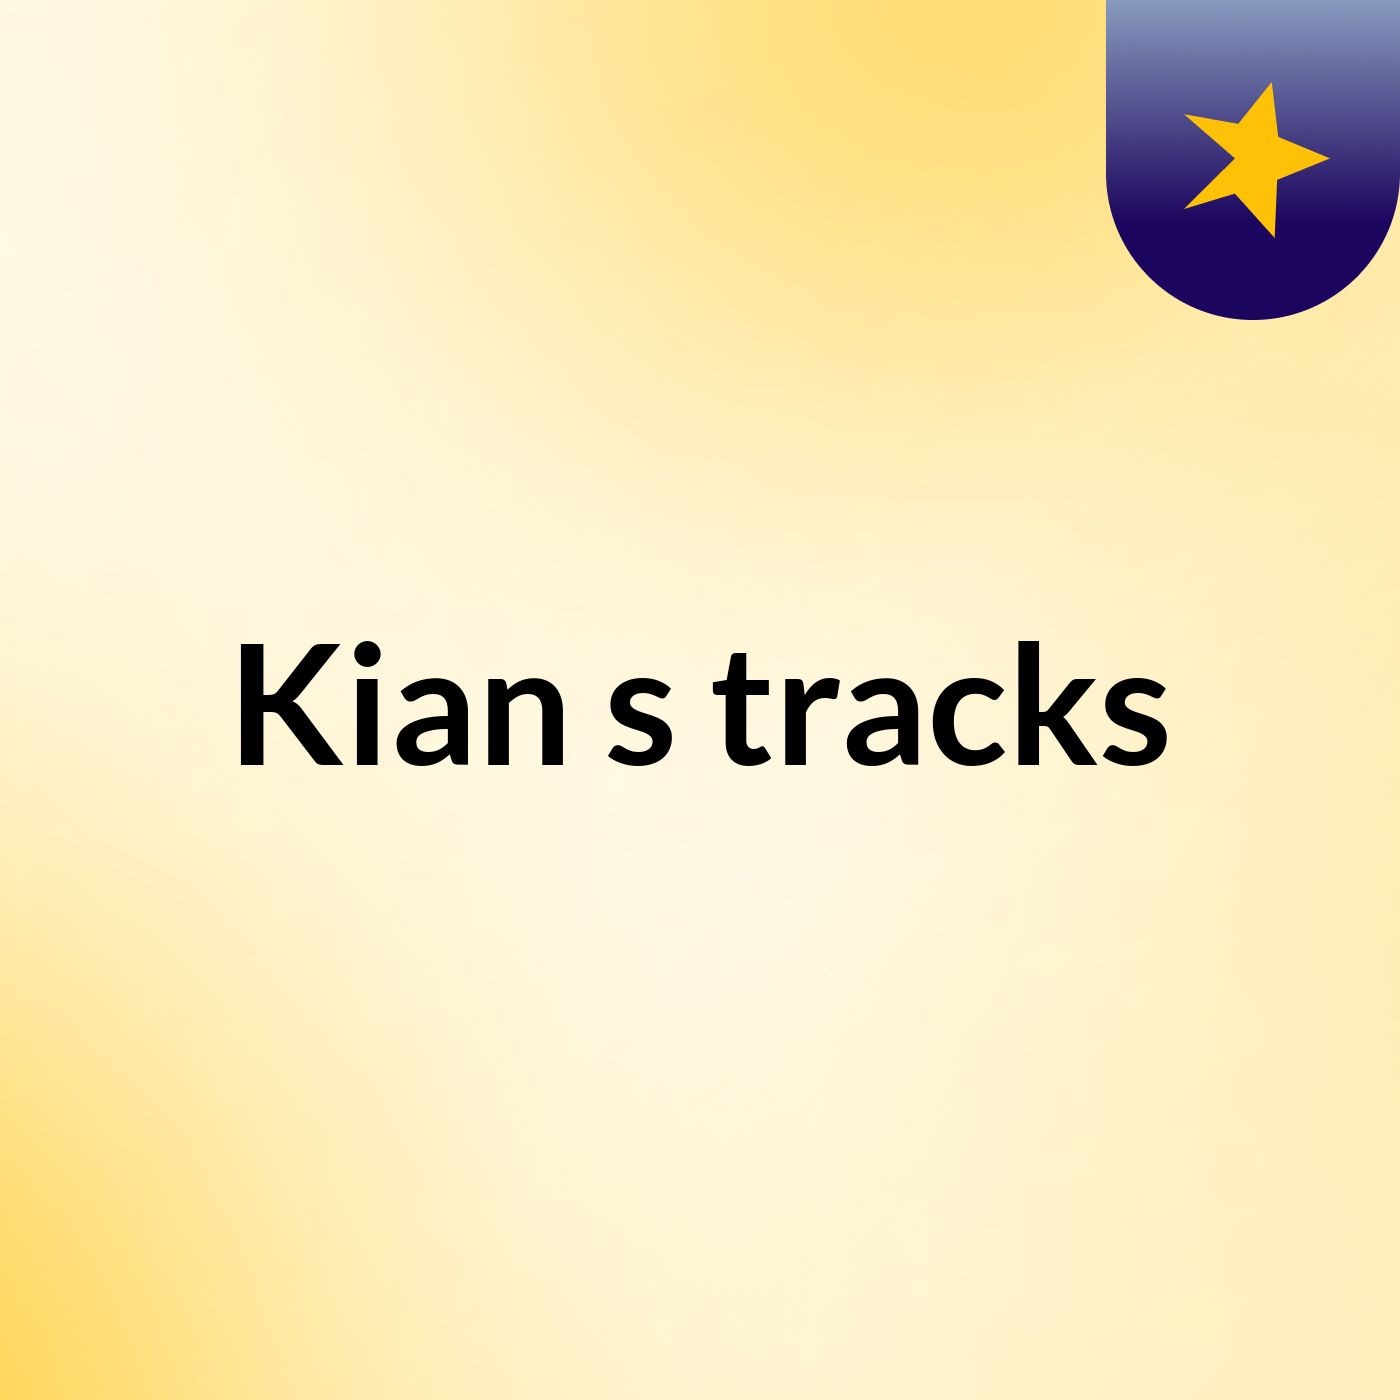 Kian's tracks